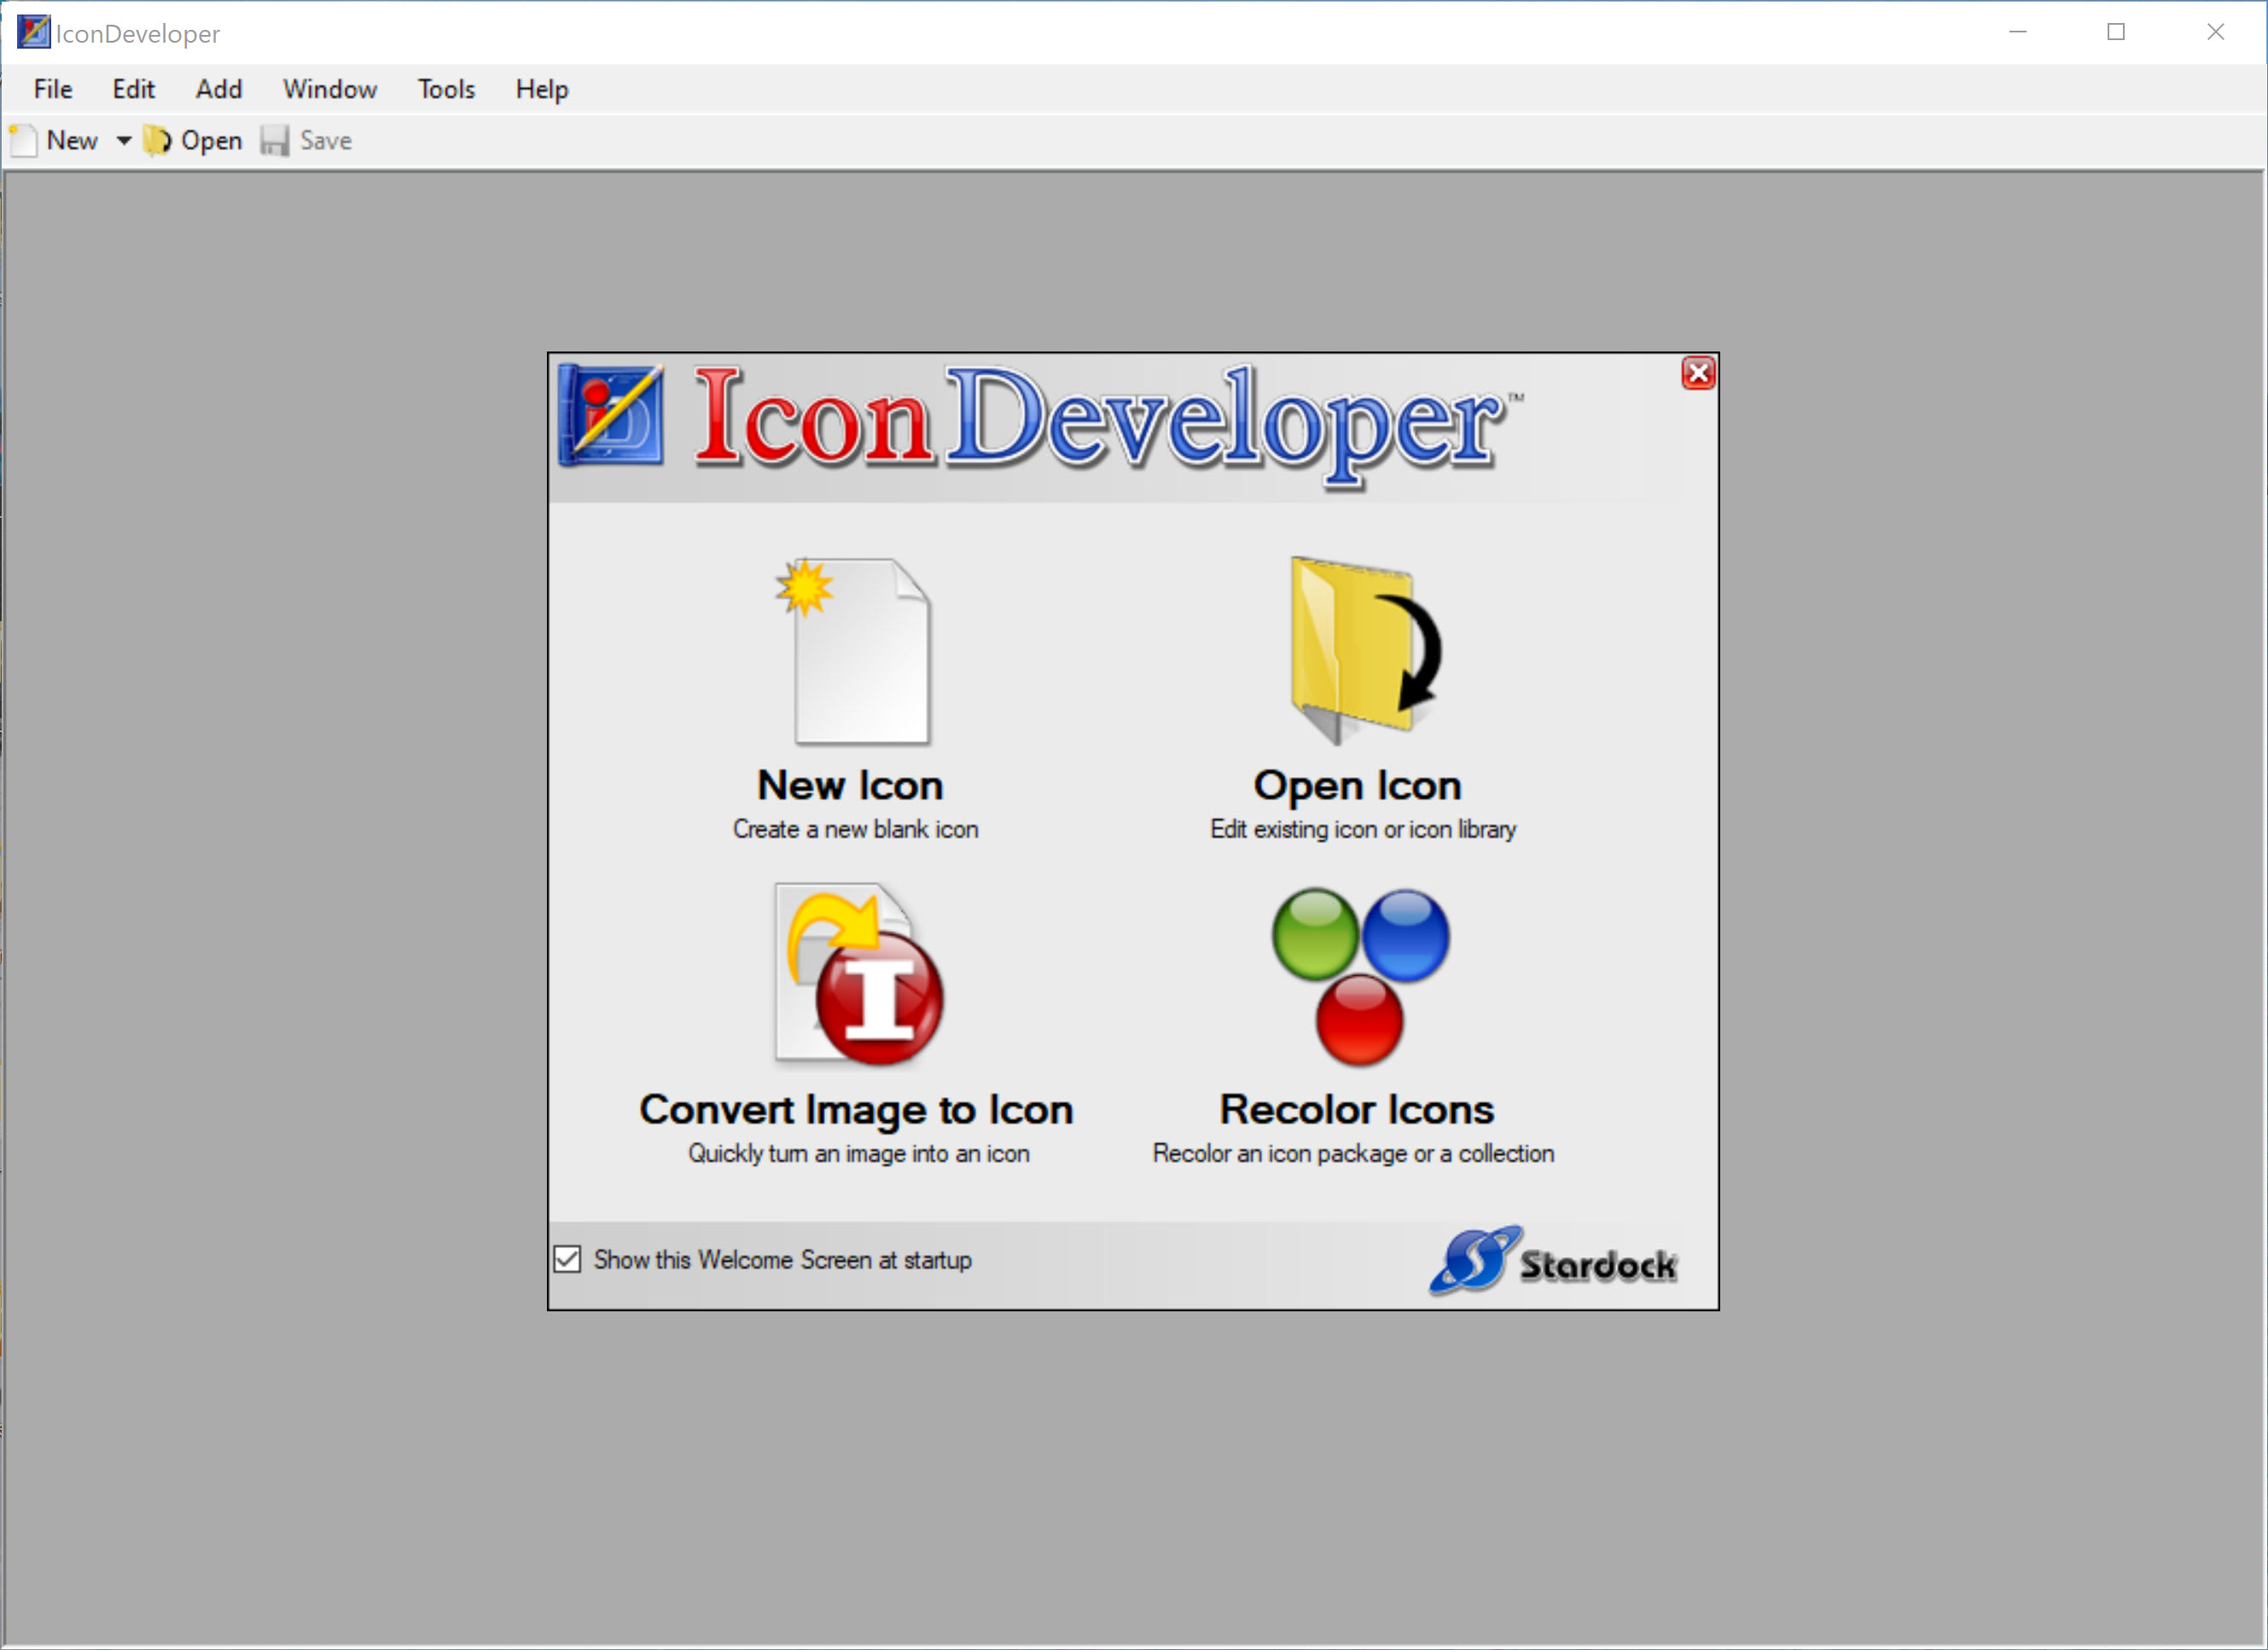 IconDeveloper start screen